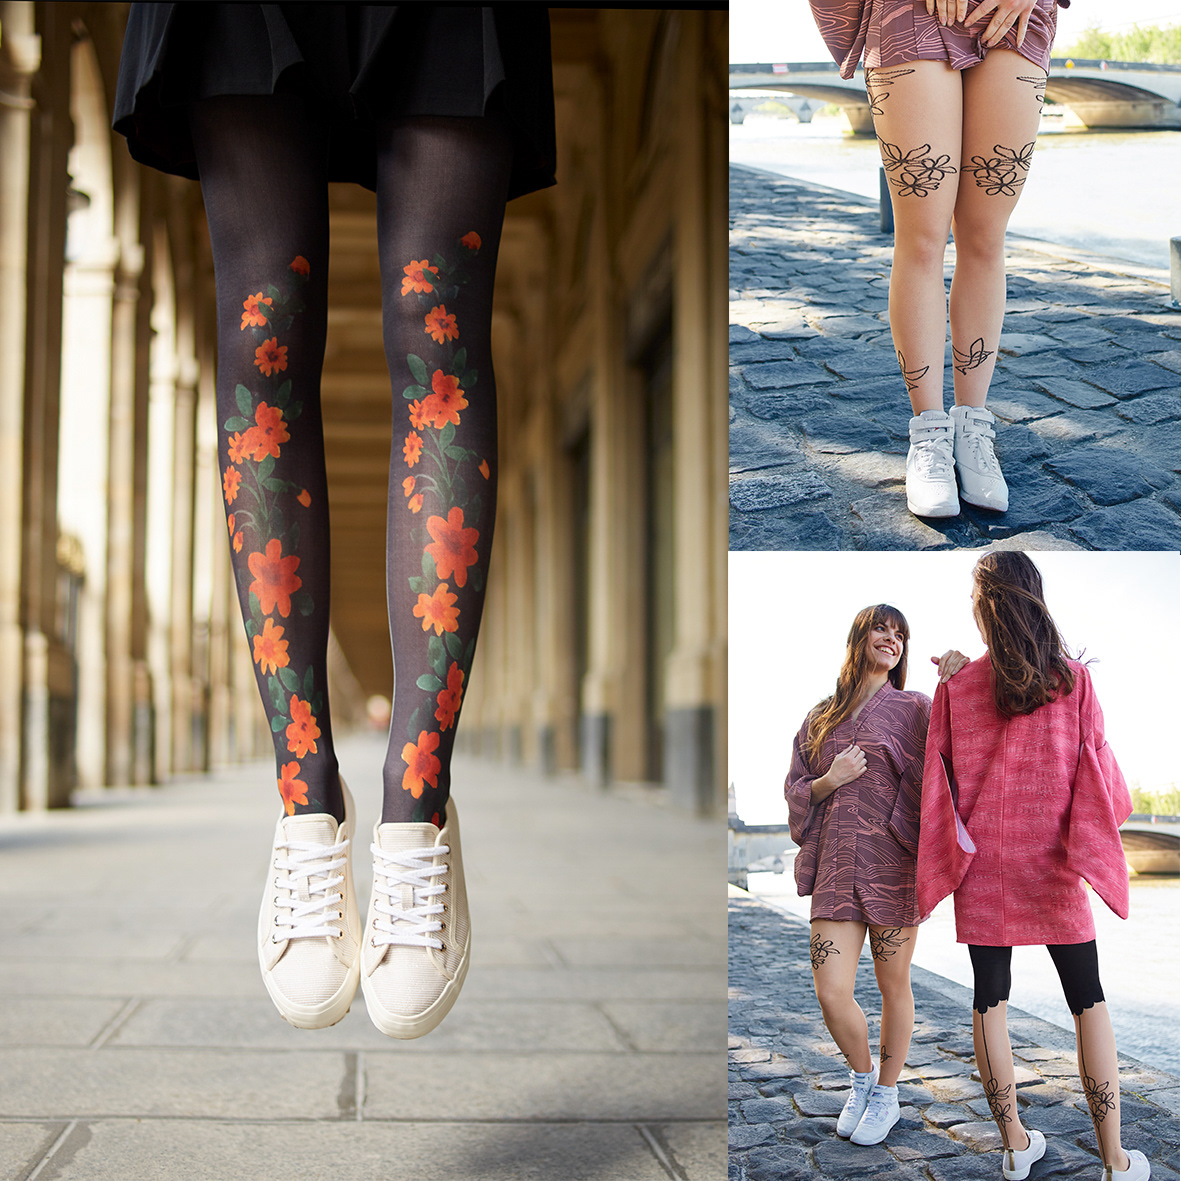 Art on the leg chaussettes Clovis & Clothilde Paris collants designer graphic socks tights